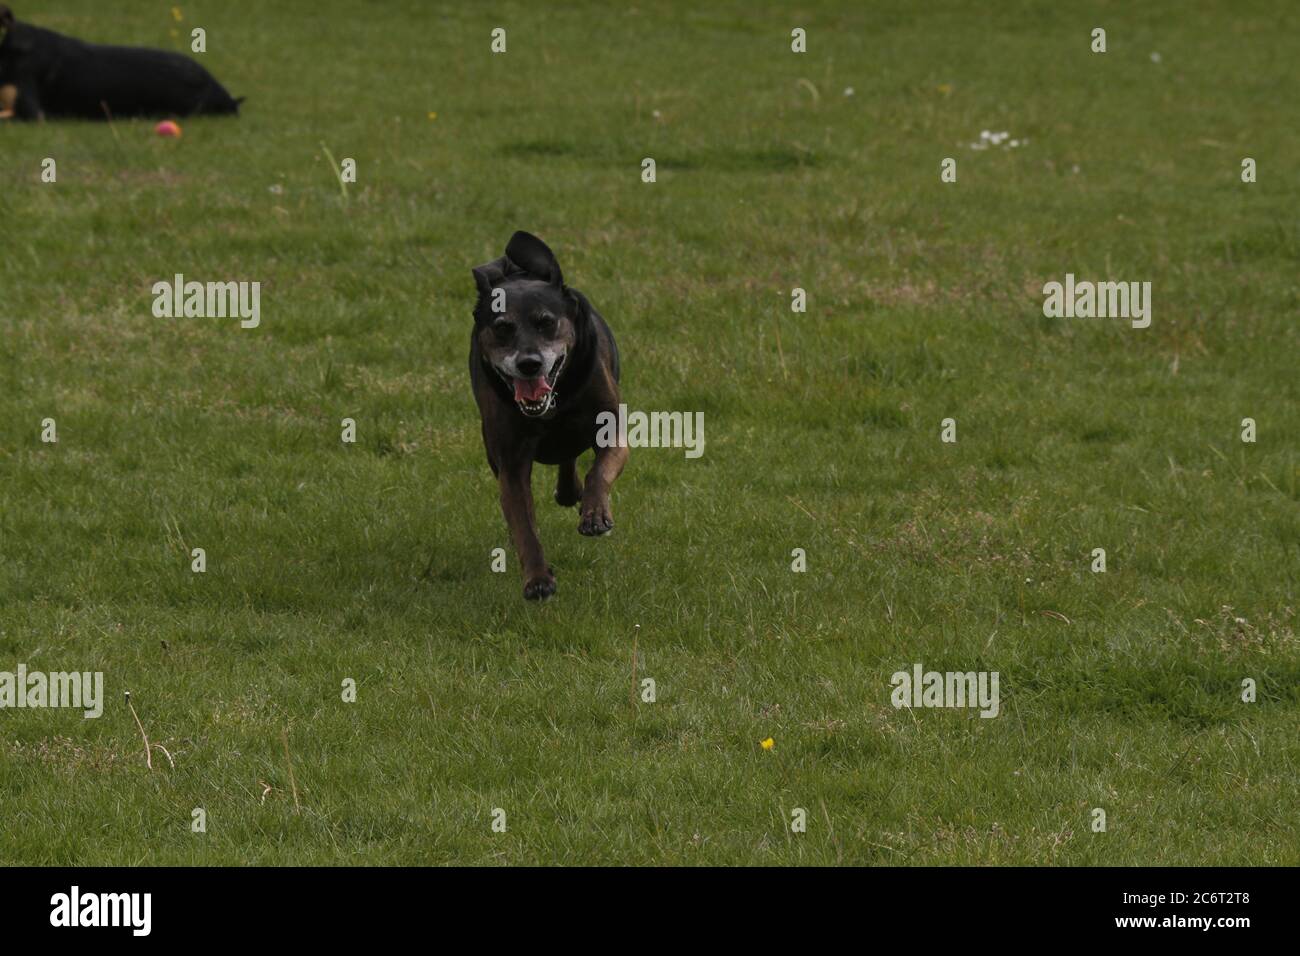 Running dog Banque D'Images